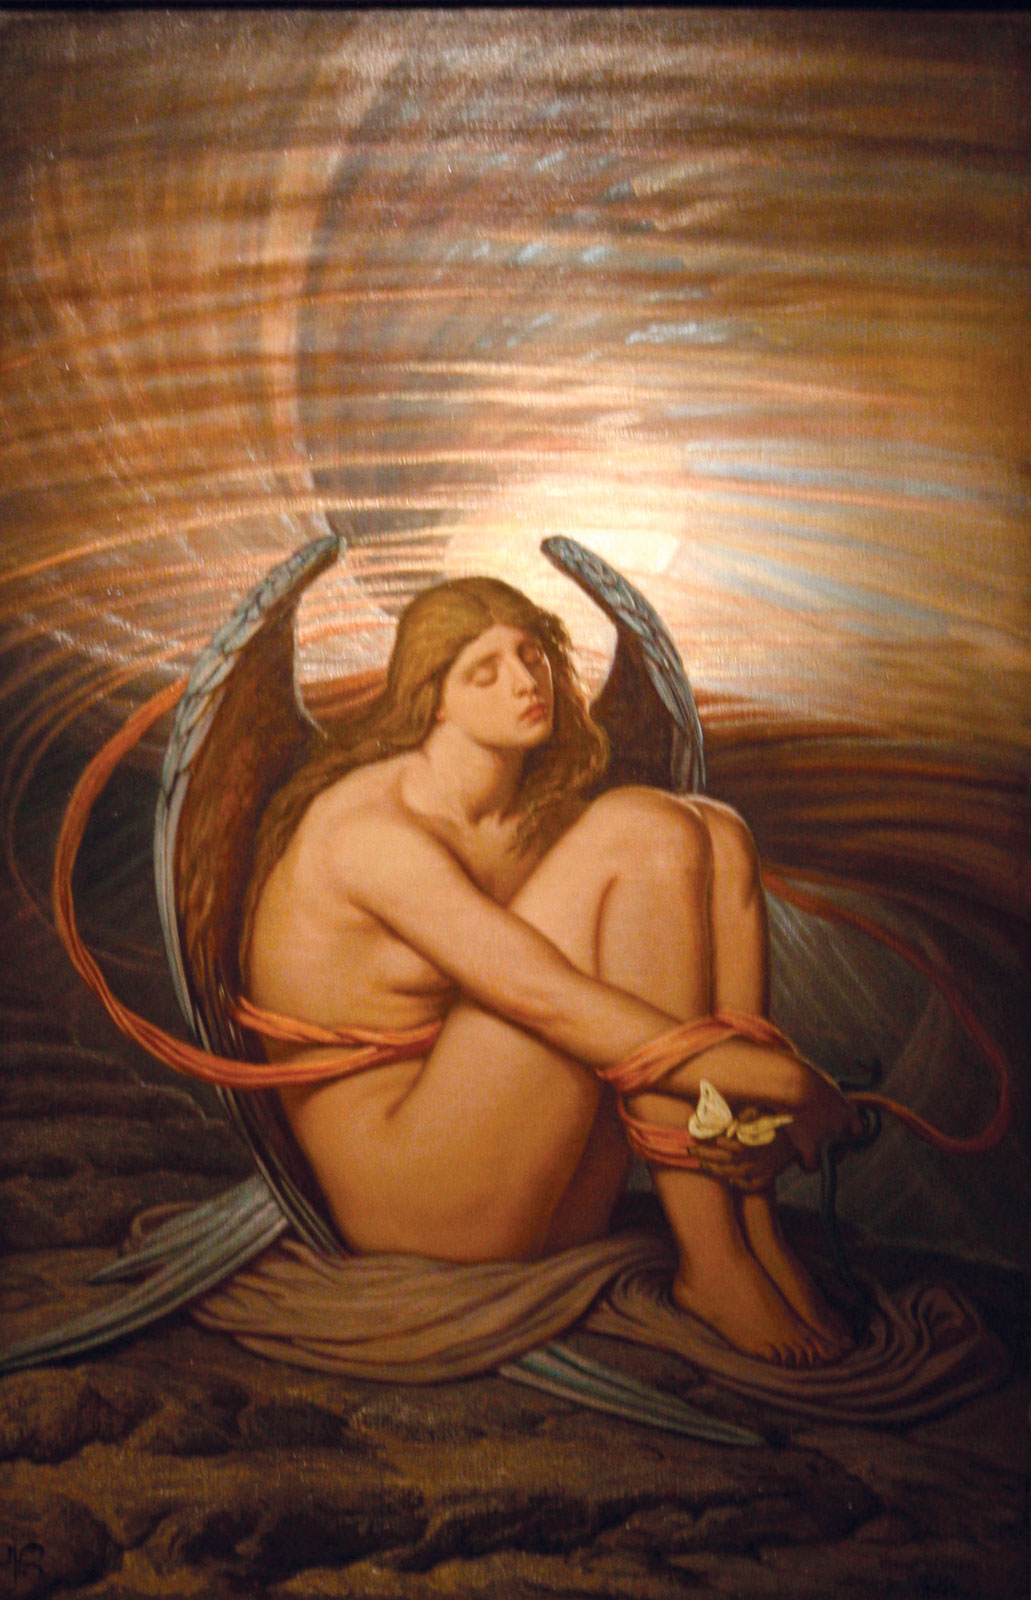 Elihu Vedder 1836-1923 | American symbolist painter and illustrator